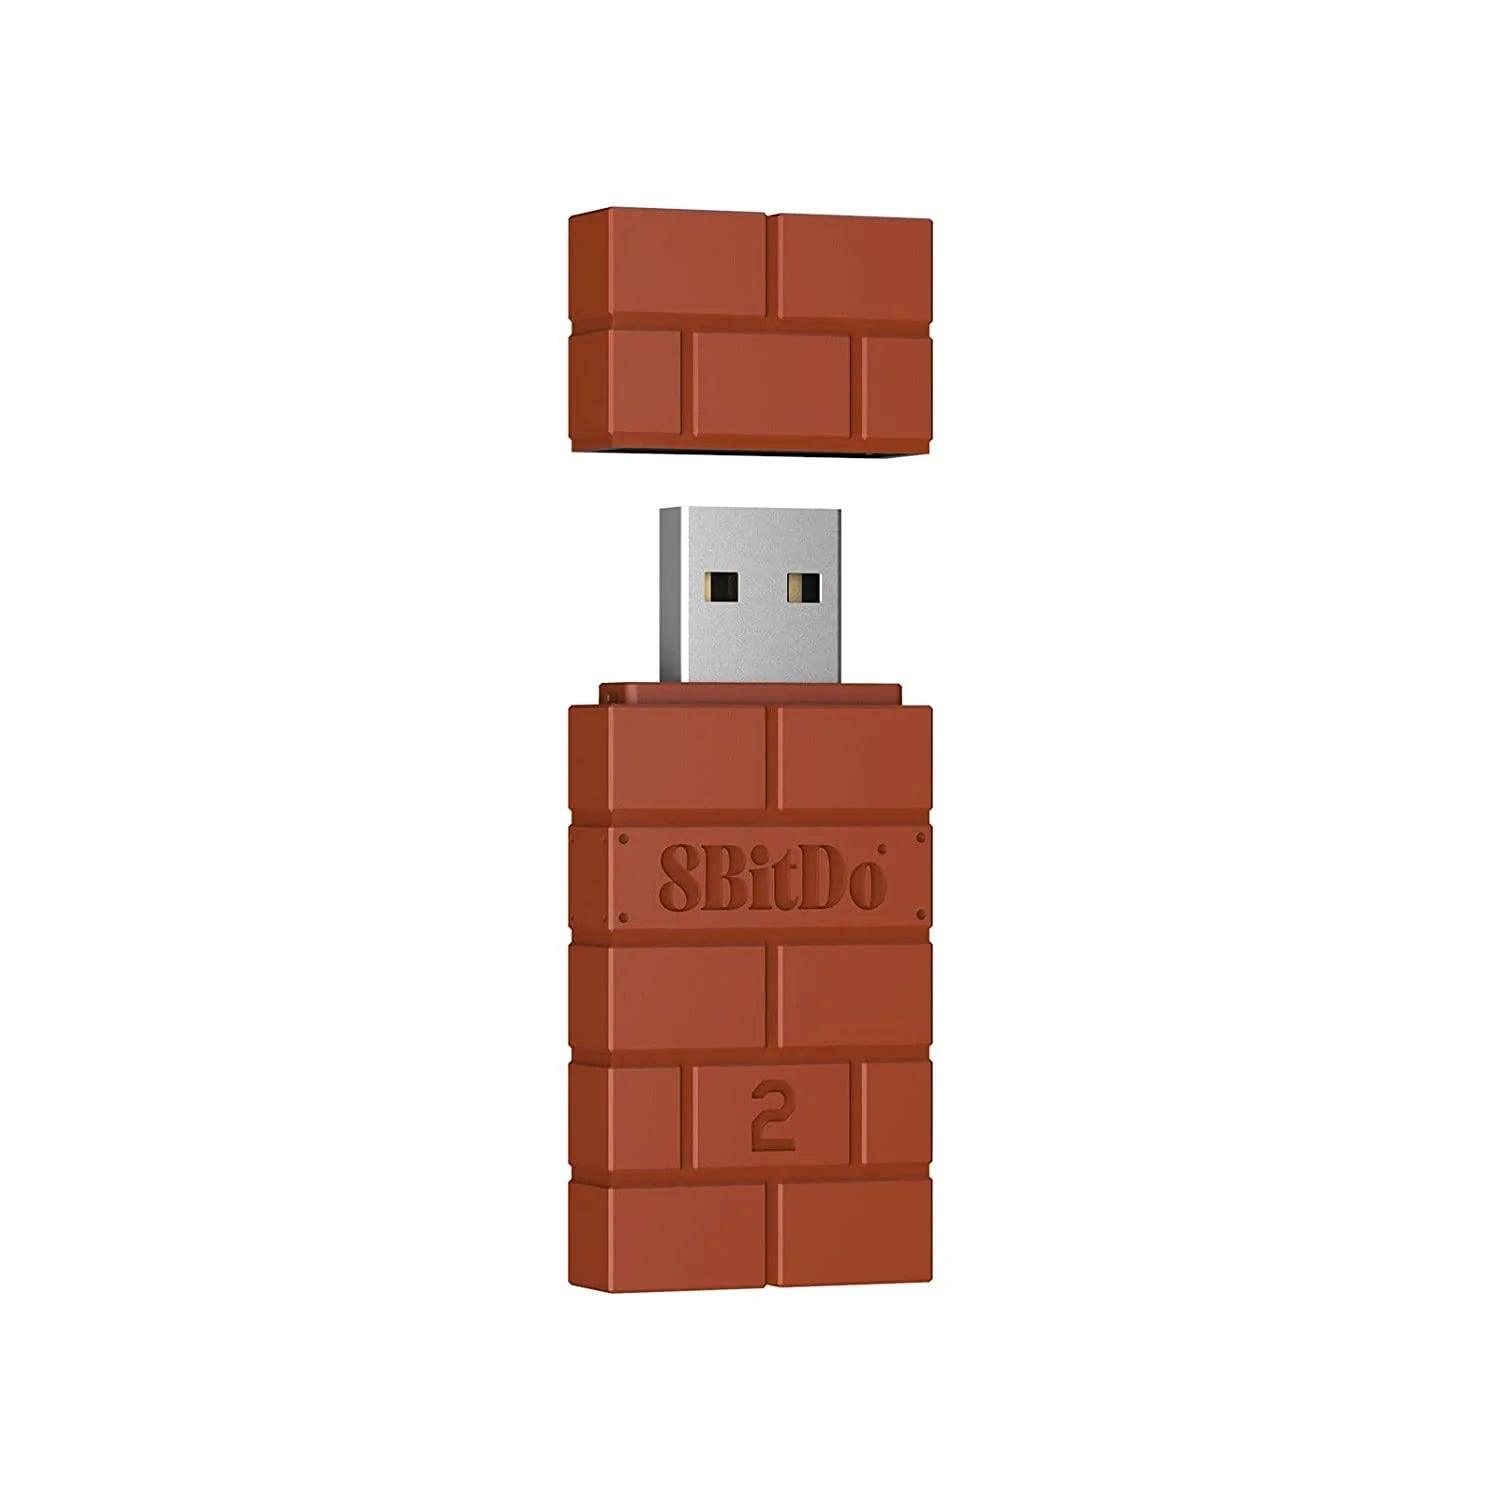 8BitDo USB Trådløs Adapter for Nintendo Switch / Windows PC /Raspberry Pi og mer! - RetroGaming.no